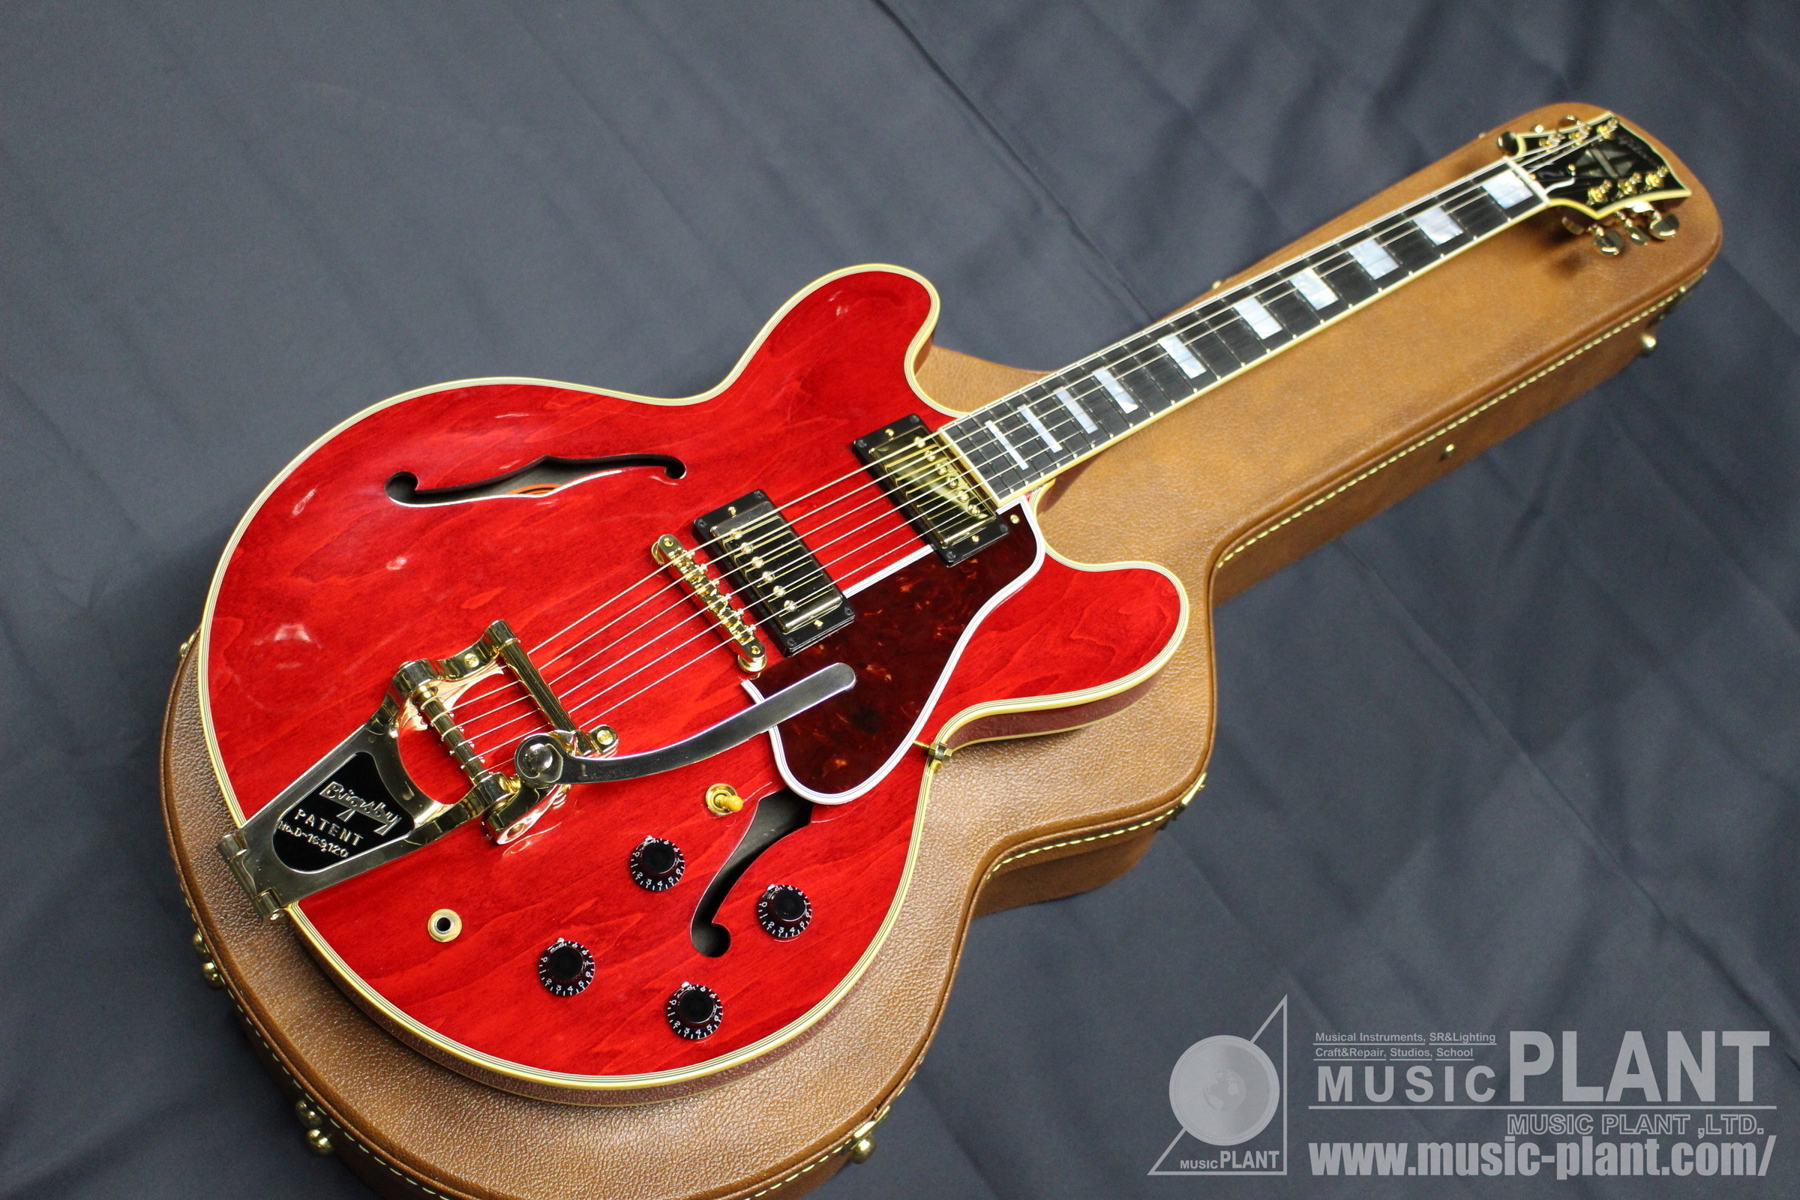 Gibson セミアコースティックギターMemphis 2015 Limited Run ES-355 Bigsby 60s  Cherry中古()売却済みです。あしからずご了承ください。 MUSIC PLANT WEBSHOP